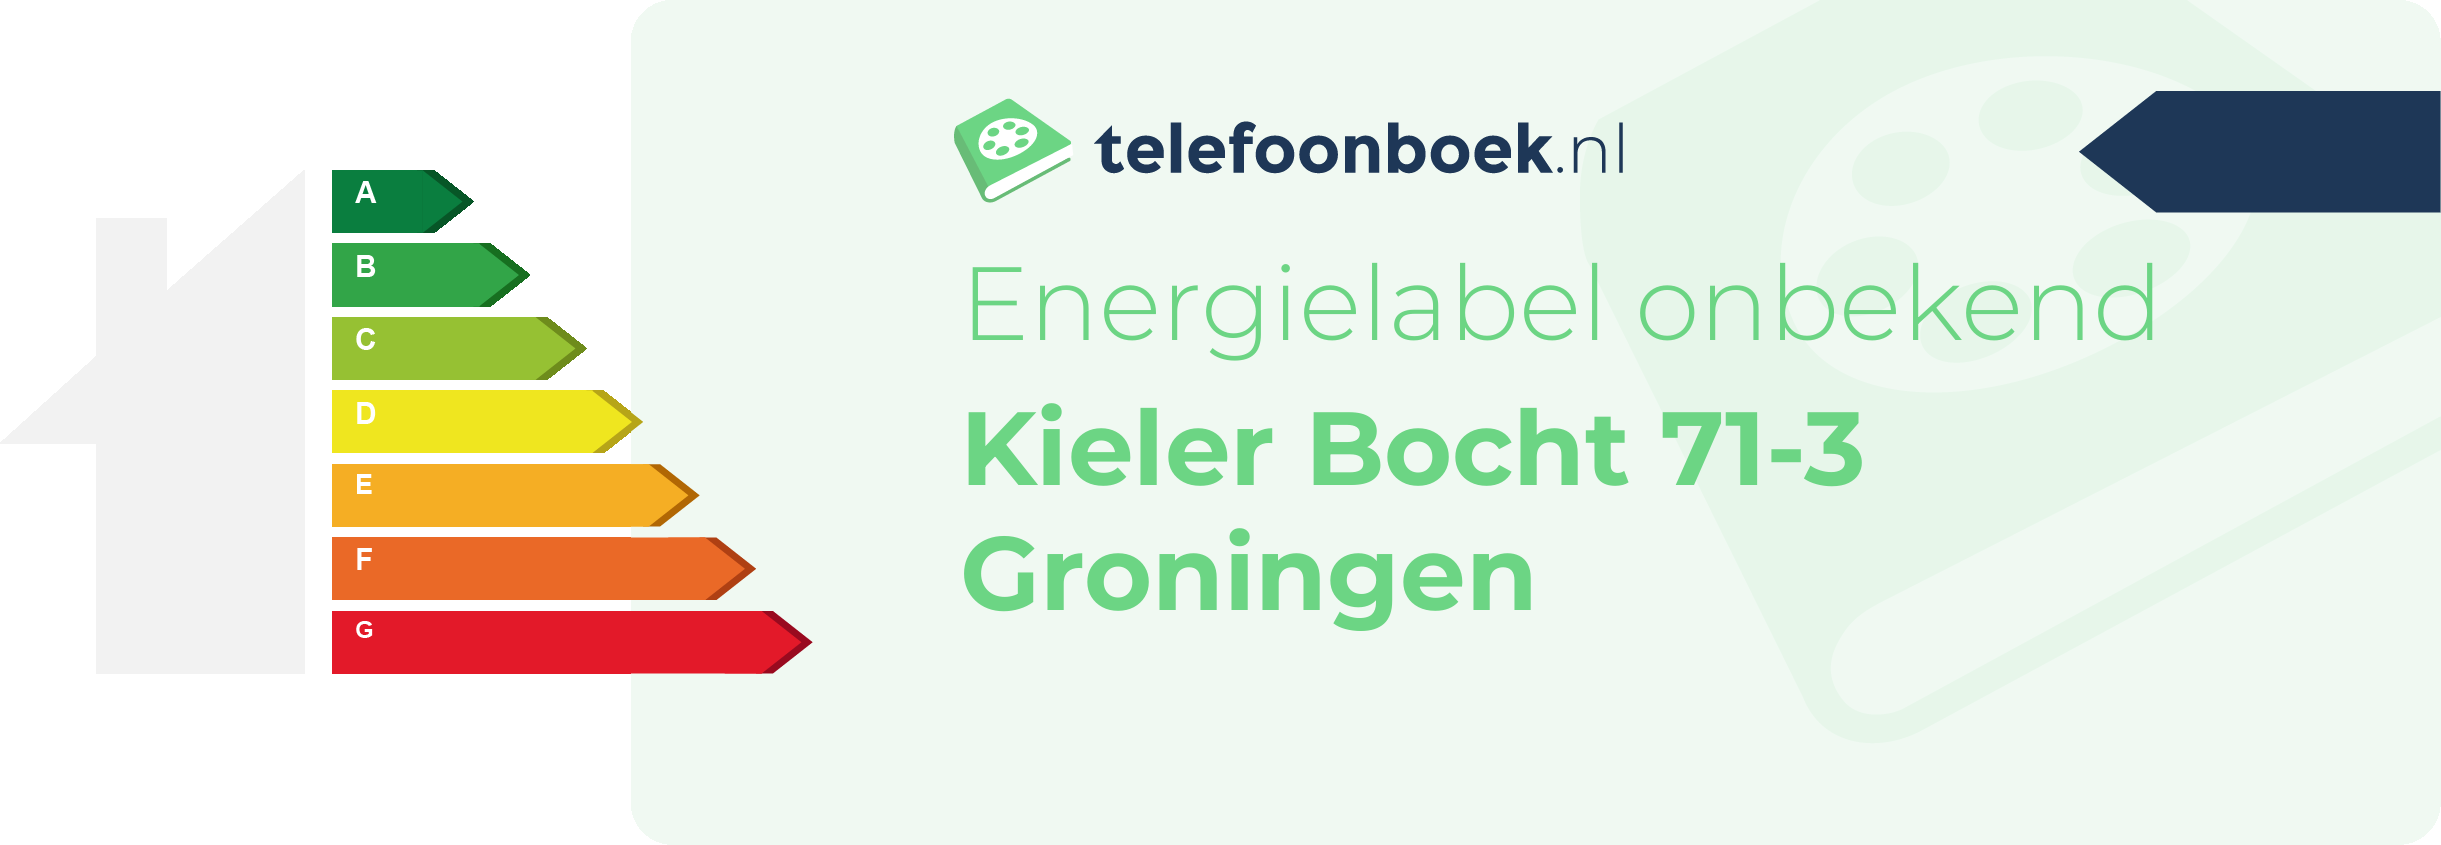 Energielabel Kieler Bocht 71-3 Groningen